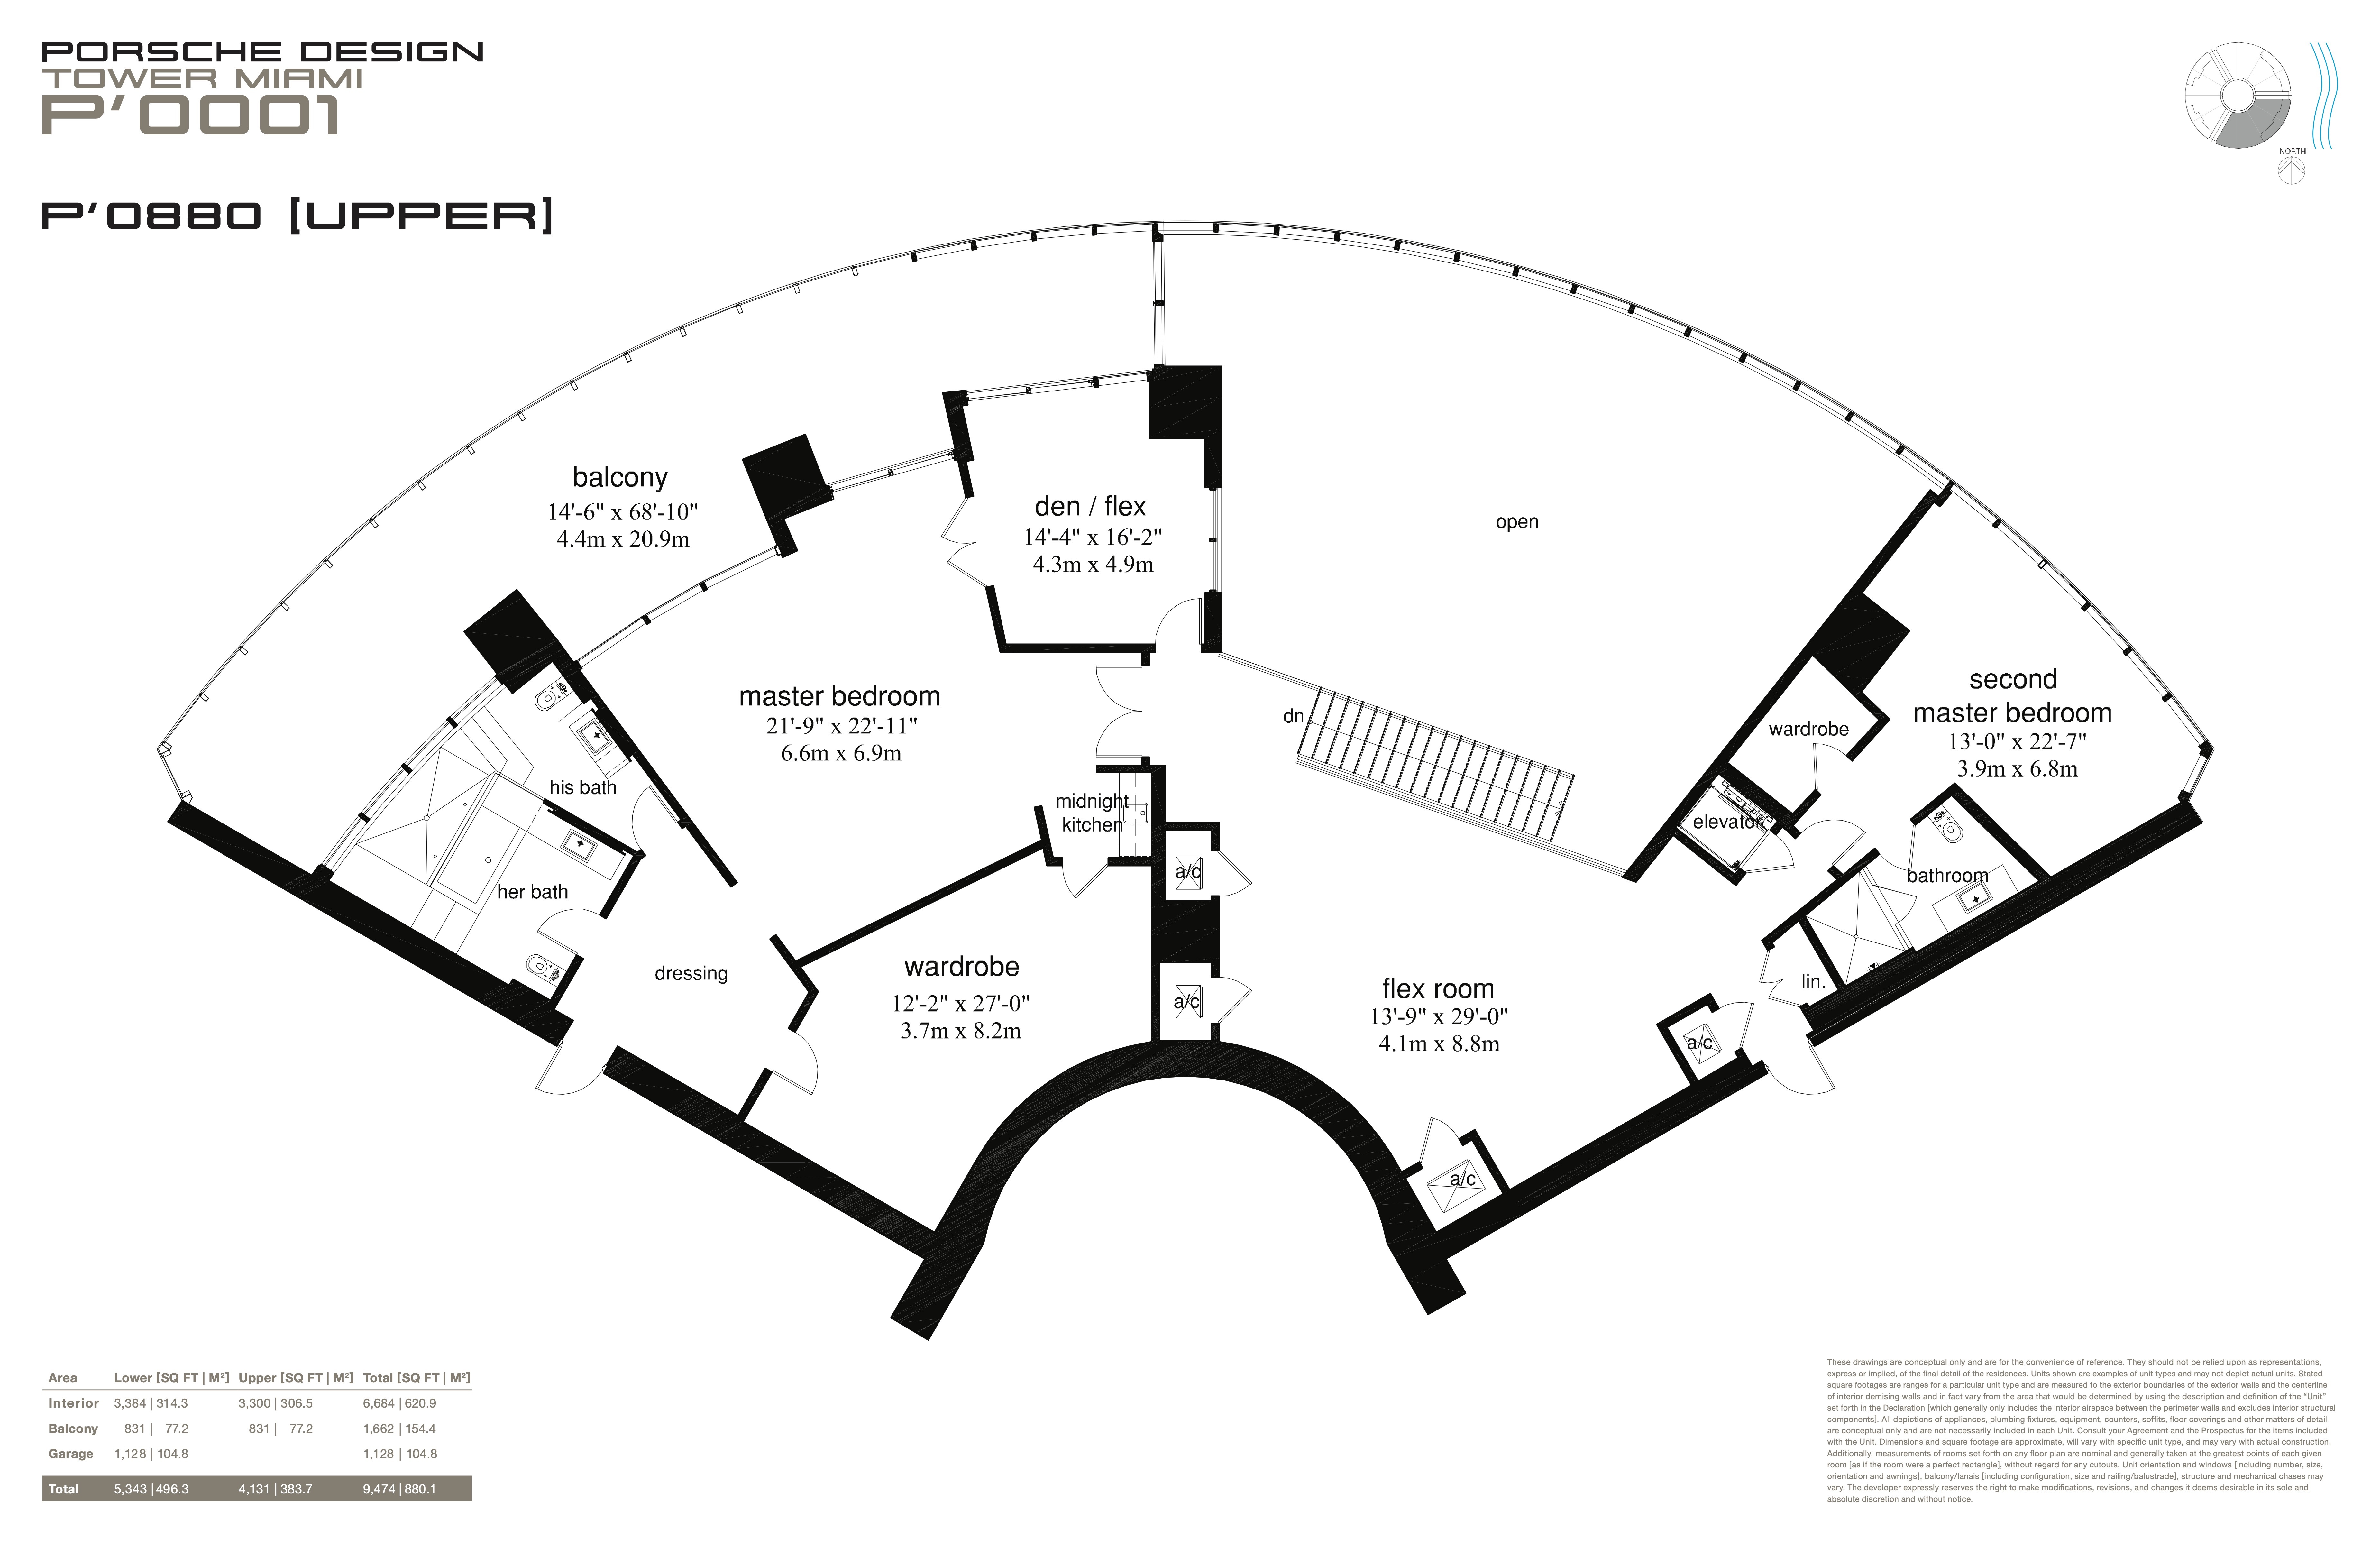 Floor Plan for Porsche Design Tower Miami Floorplans, P' 0880 Upper